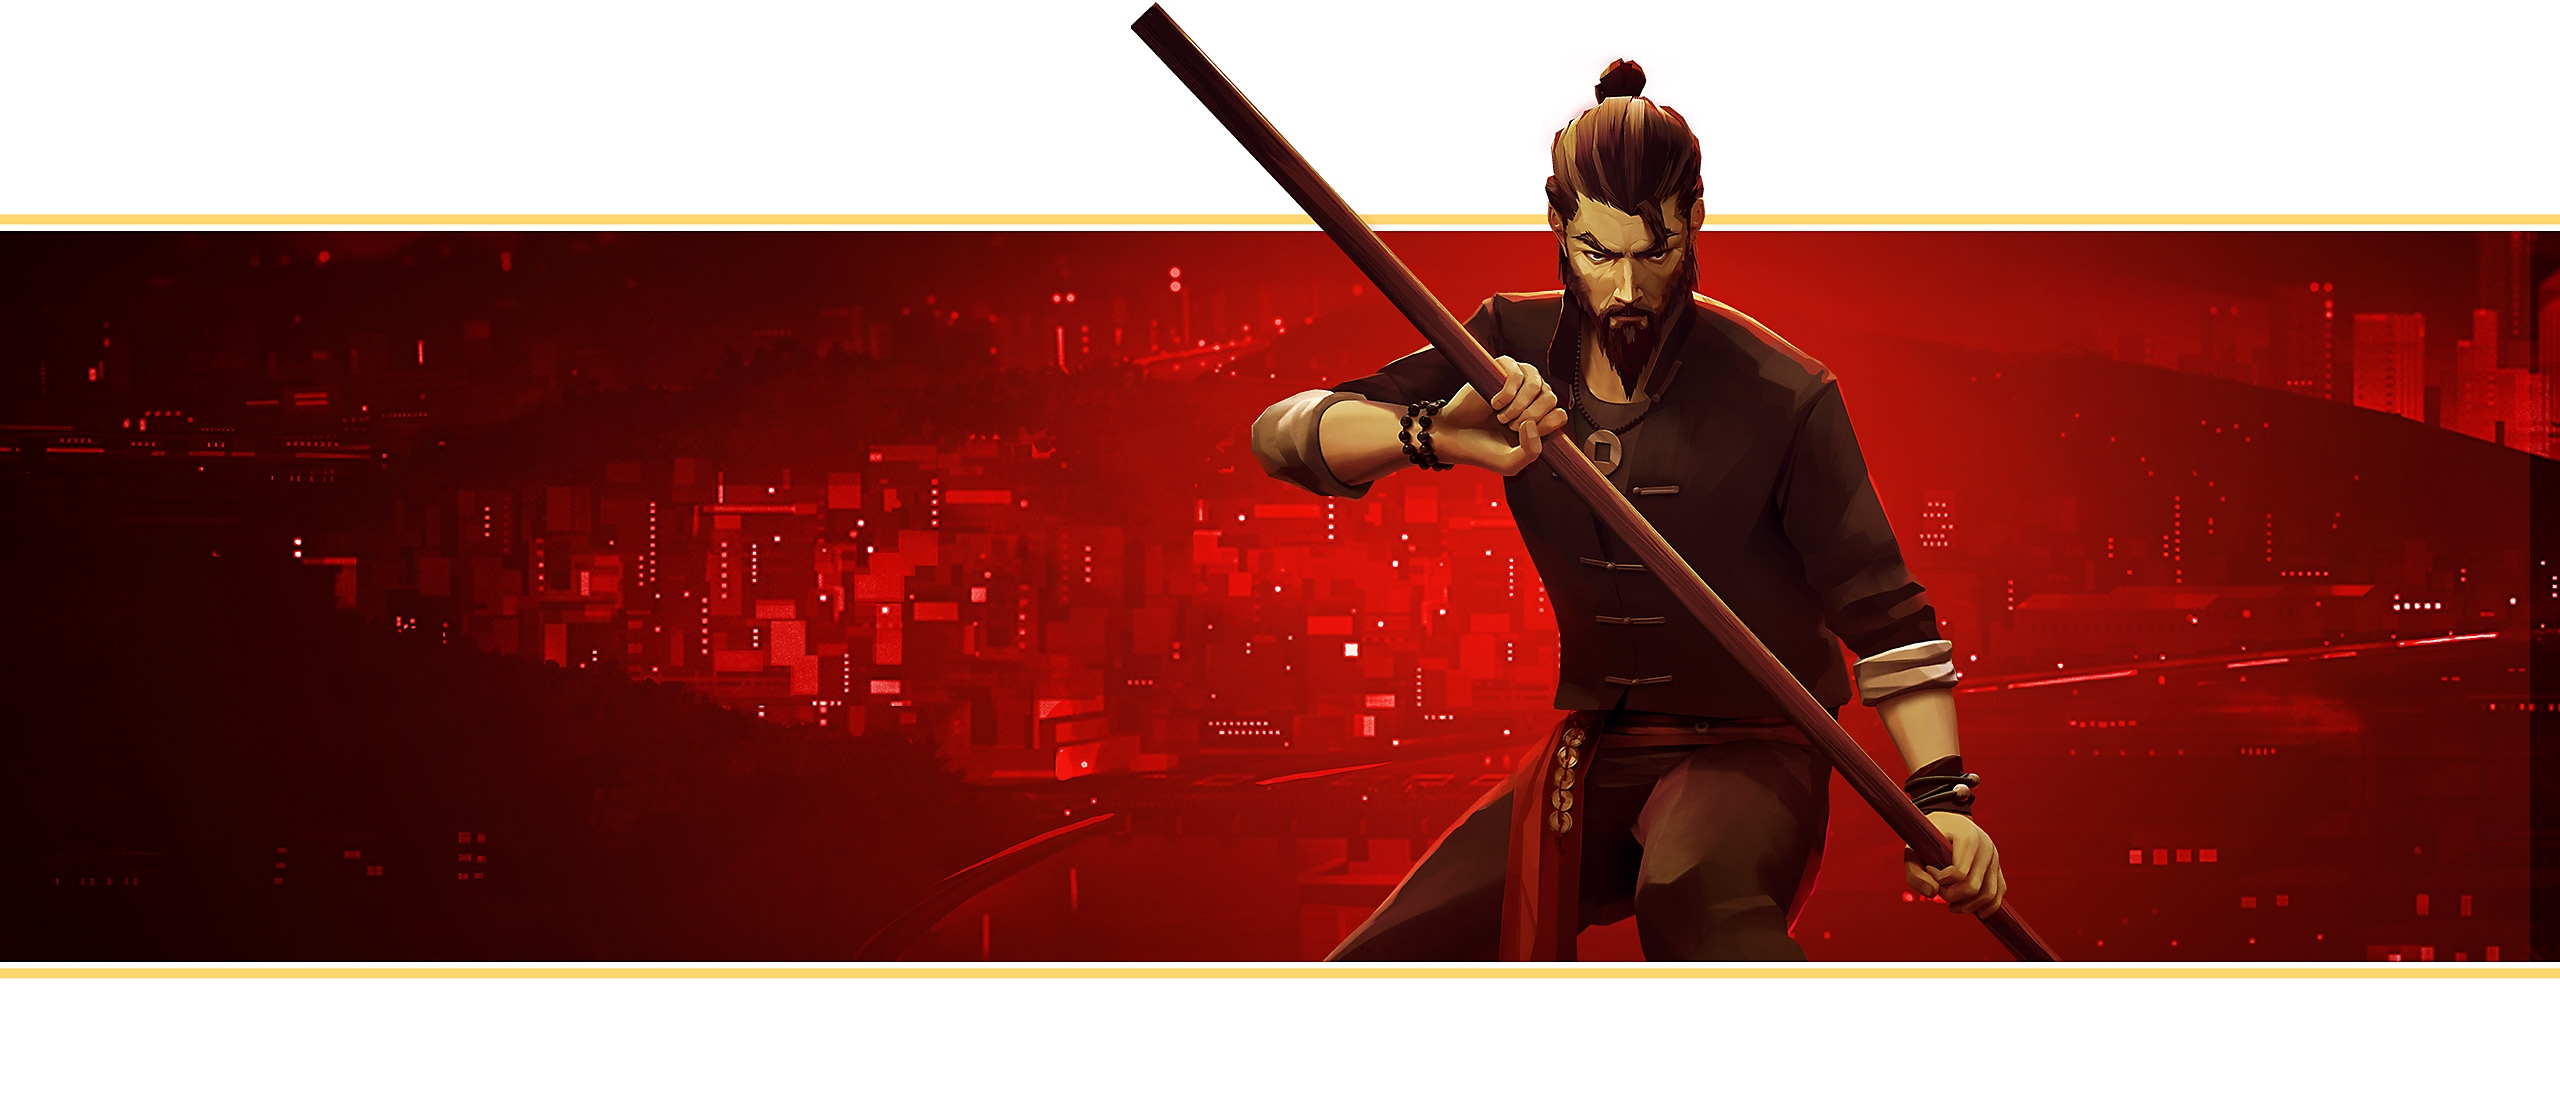 Sifu banner παρουσίασης με βάση εικαστικό από το παιχνίδι. Ο βασικός χαρακτήρας, κοιτάει, κρατώντας στα δύο του χέρια ένα ξύλινο ραβδί.